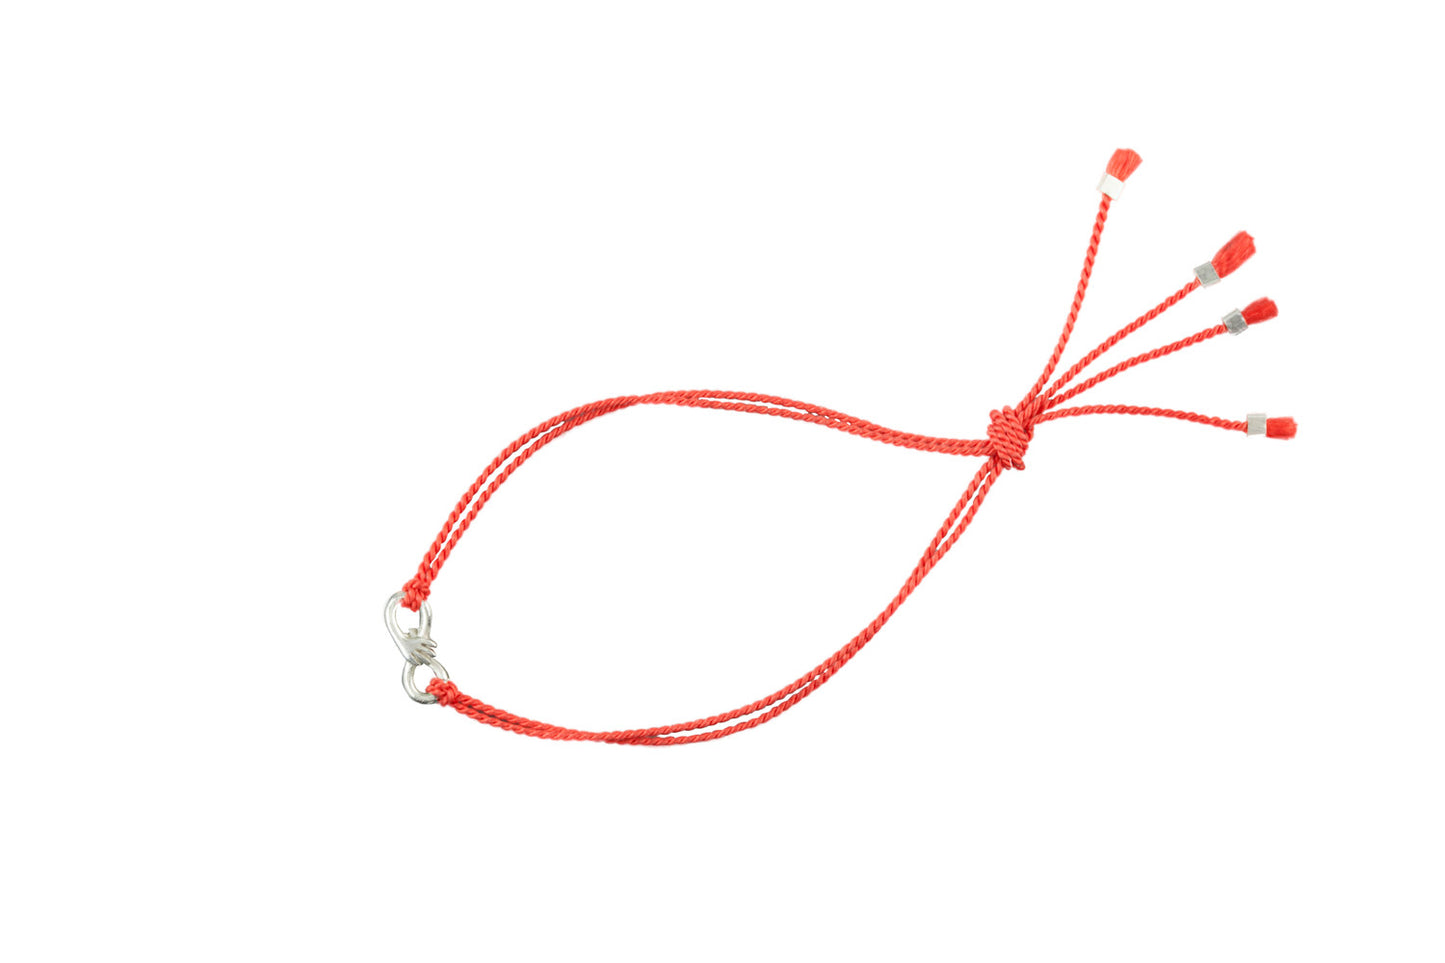 Cuddle charm bracelet on red silk thread